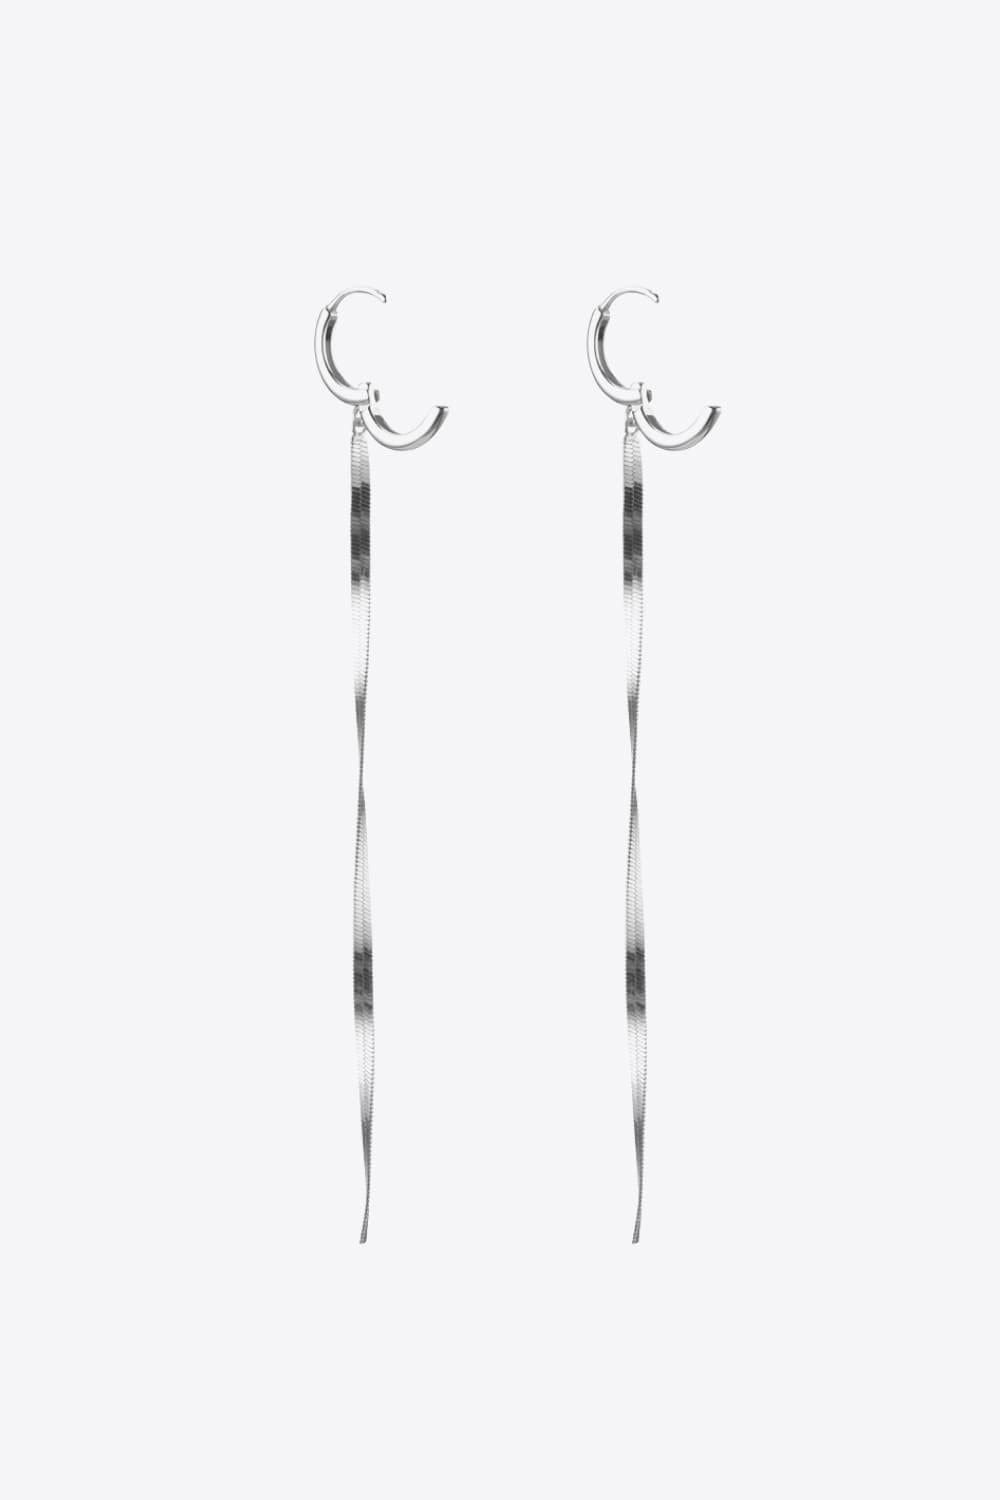 925 Sterling Silver Long Snake Chain Earrings - Earrings - FITGGINS